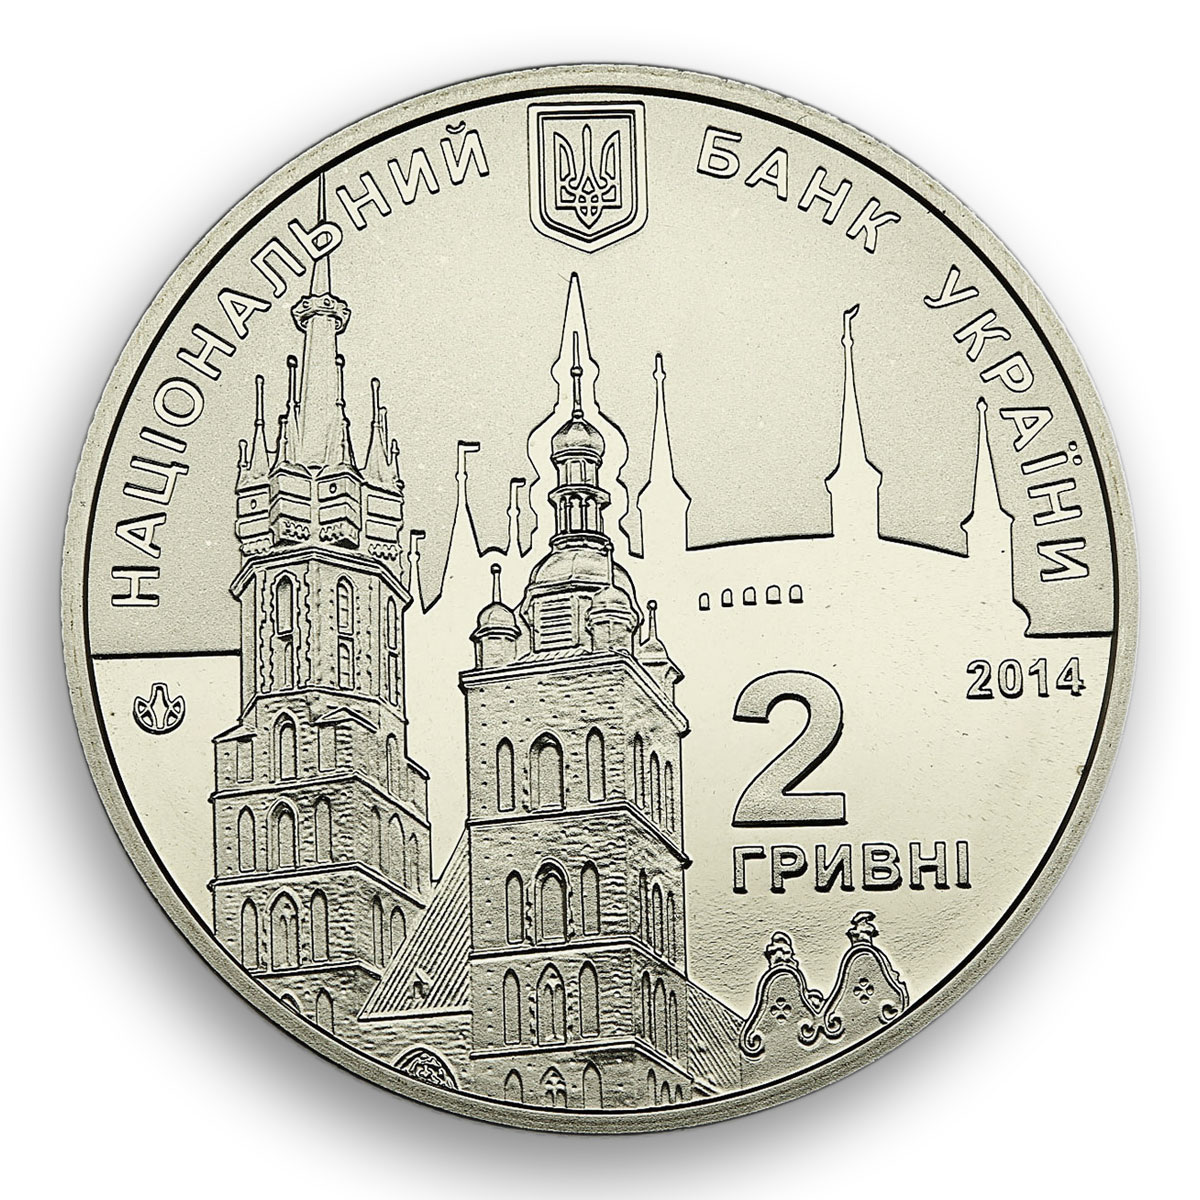 Ukraine 2 hryvnia Yevhenii Berezniak state hero military agent nickel coin 2014